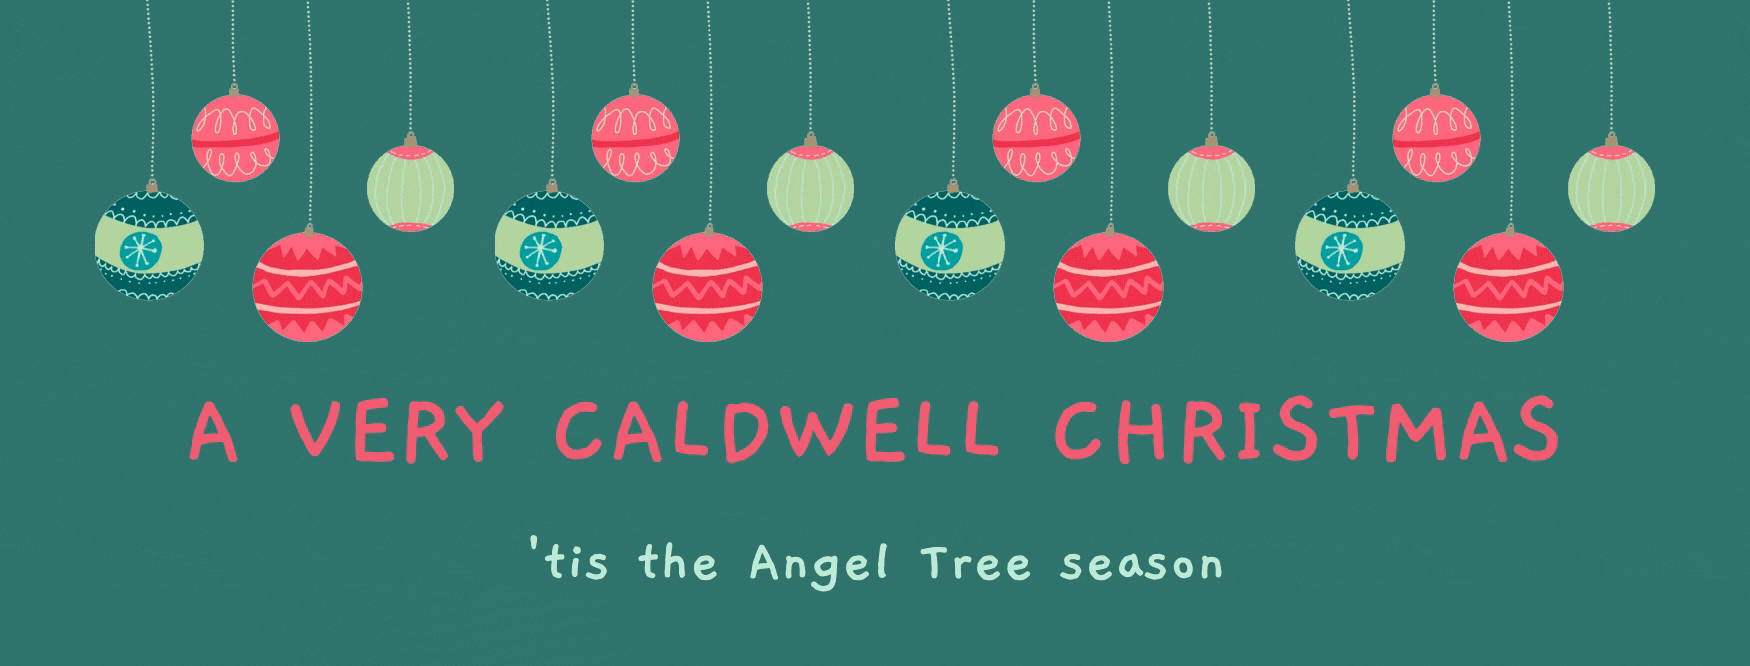 A Very Caldwell Christmas